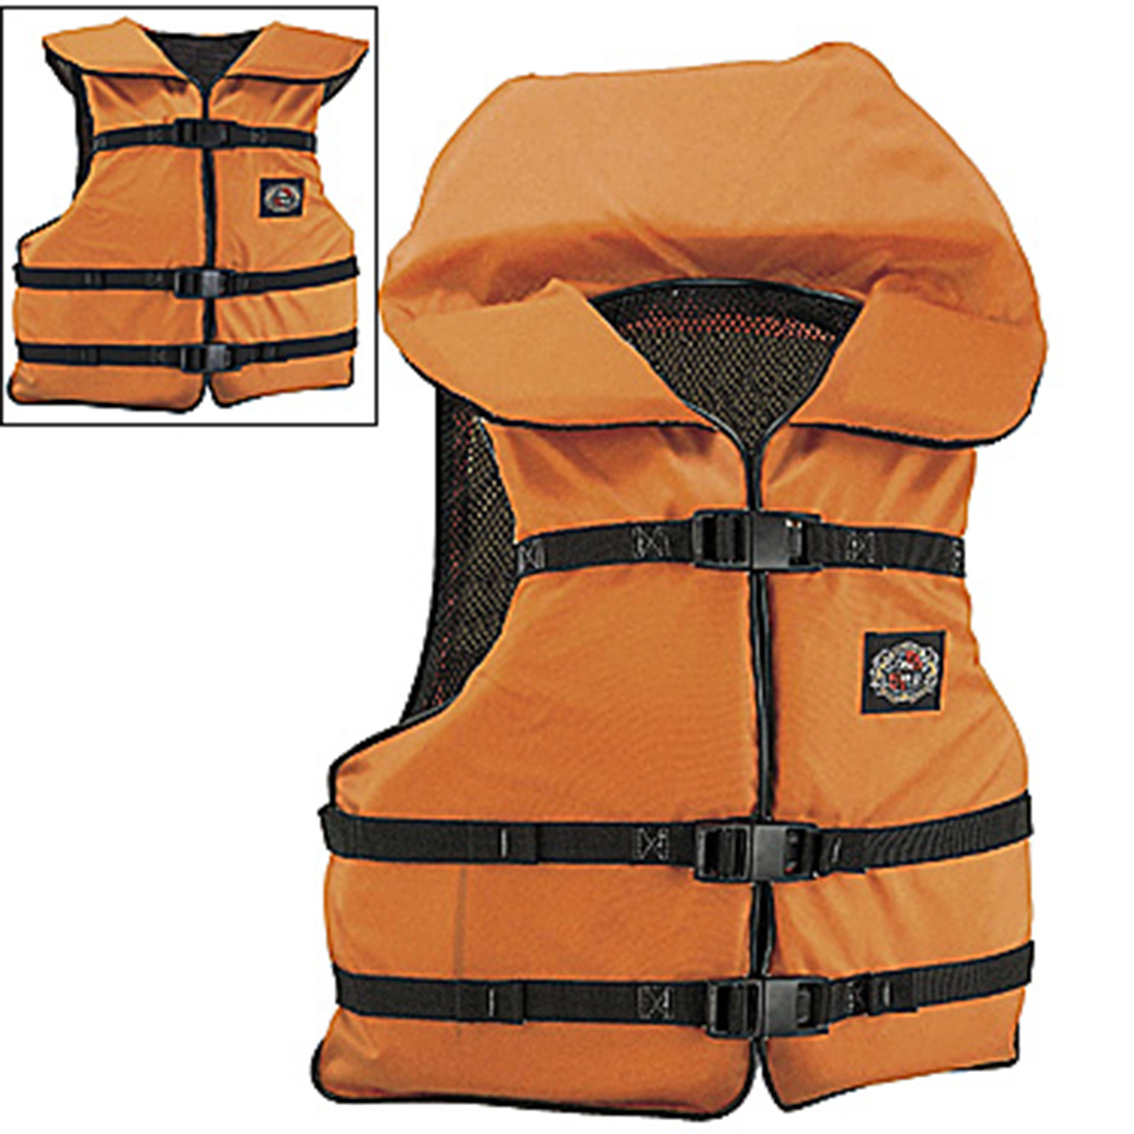 Stearns River Rafting Life Vest | Life Vests | Sports & Outdoors | Shop ...